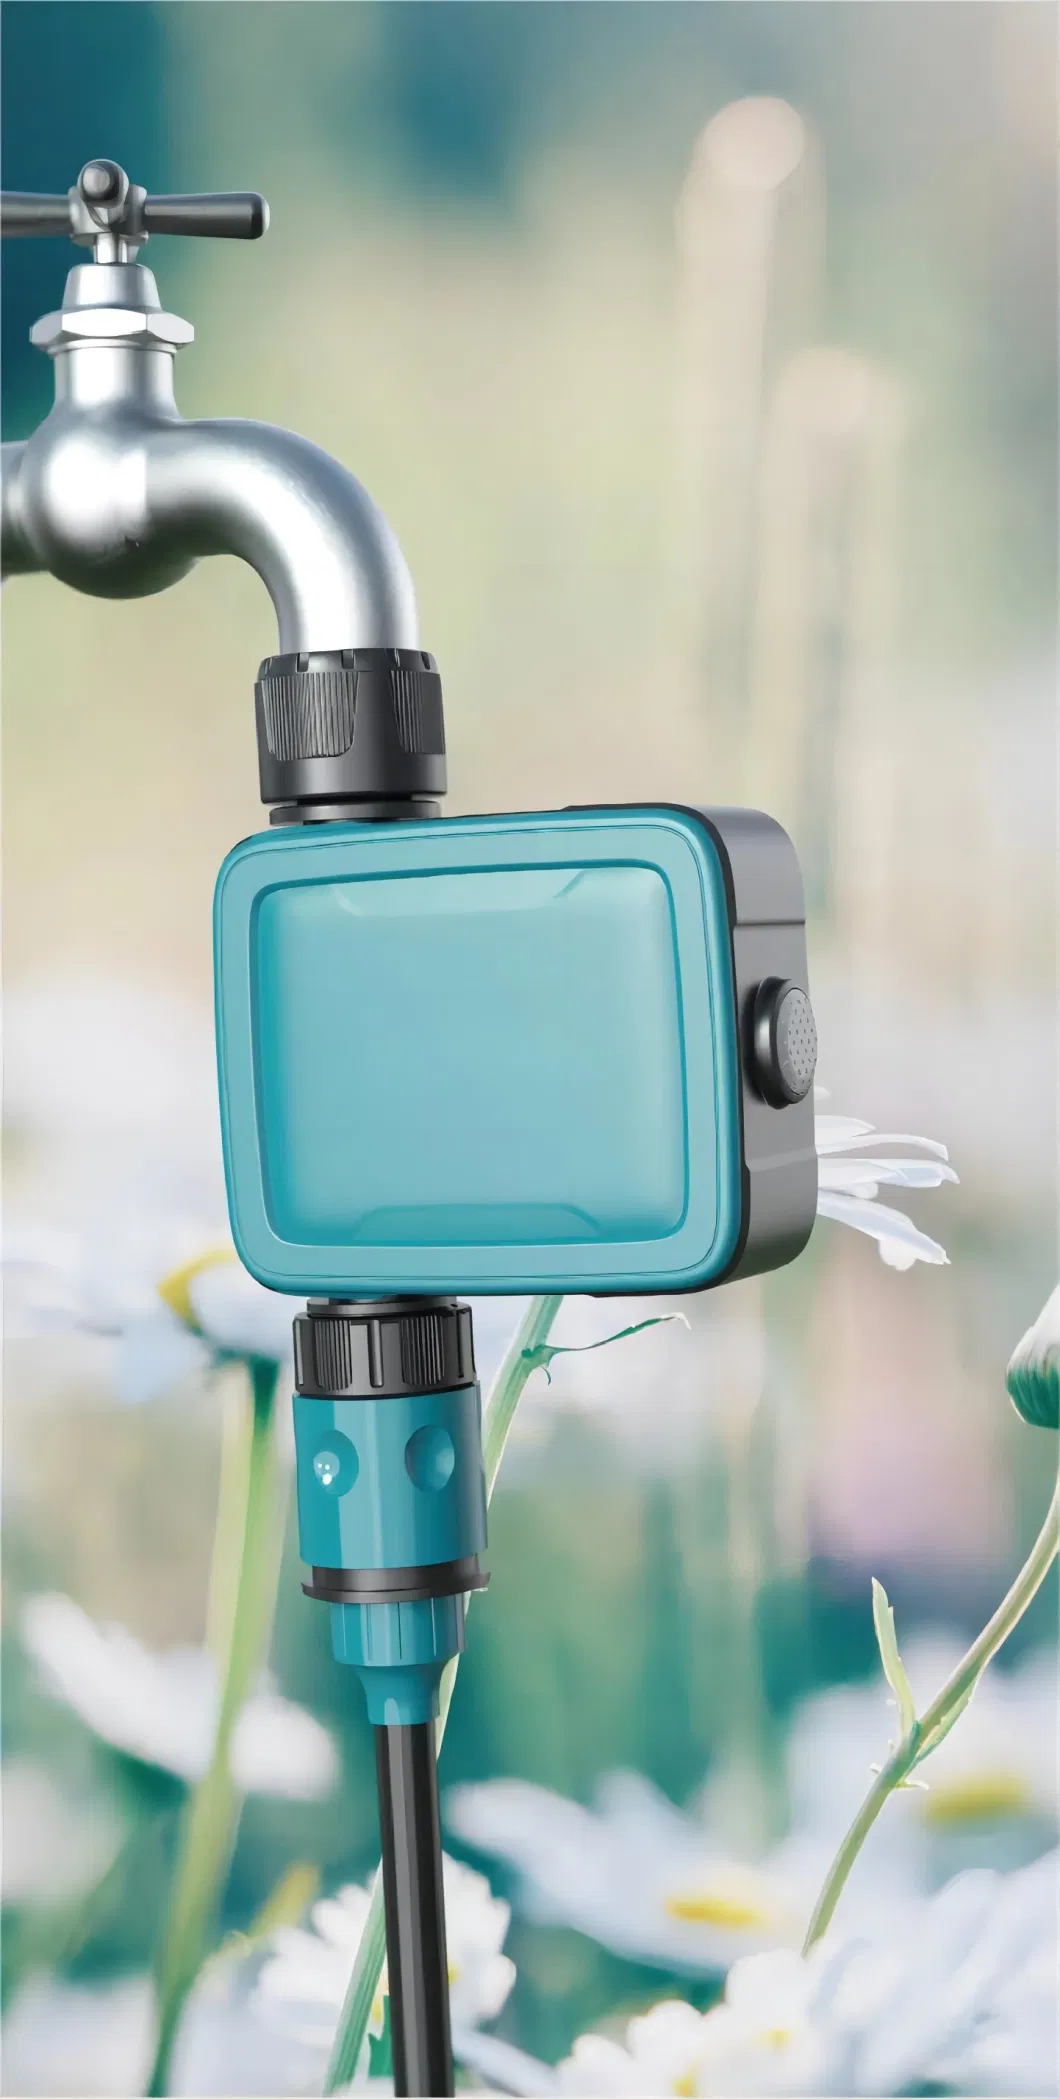 Xfdz Home Garden Farm Automatic Irrigation Sprinkler Hose Water Timer with Rain Sensor Function